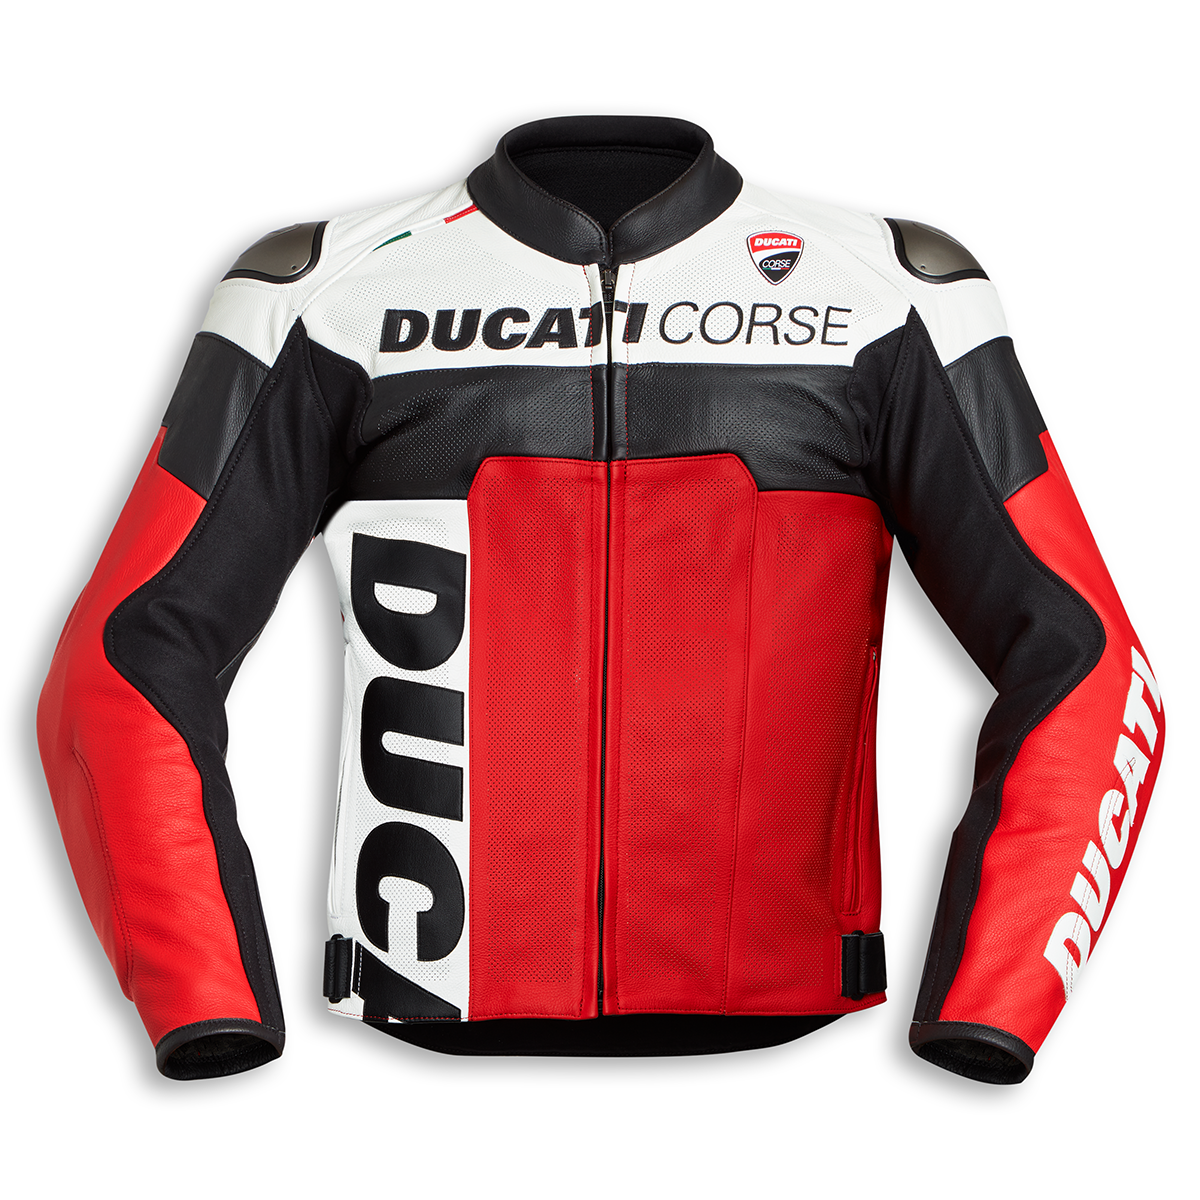 Ducati Corse C5 Men's Leather Jacket